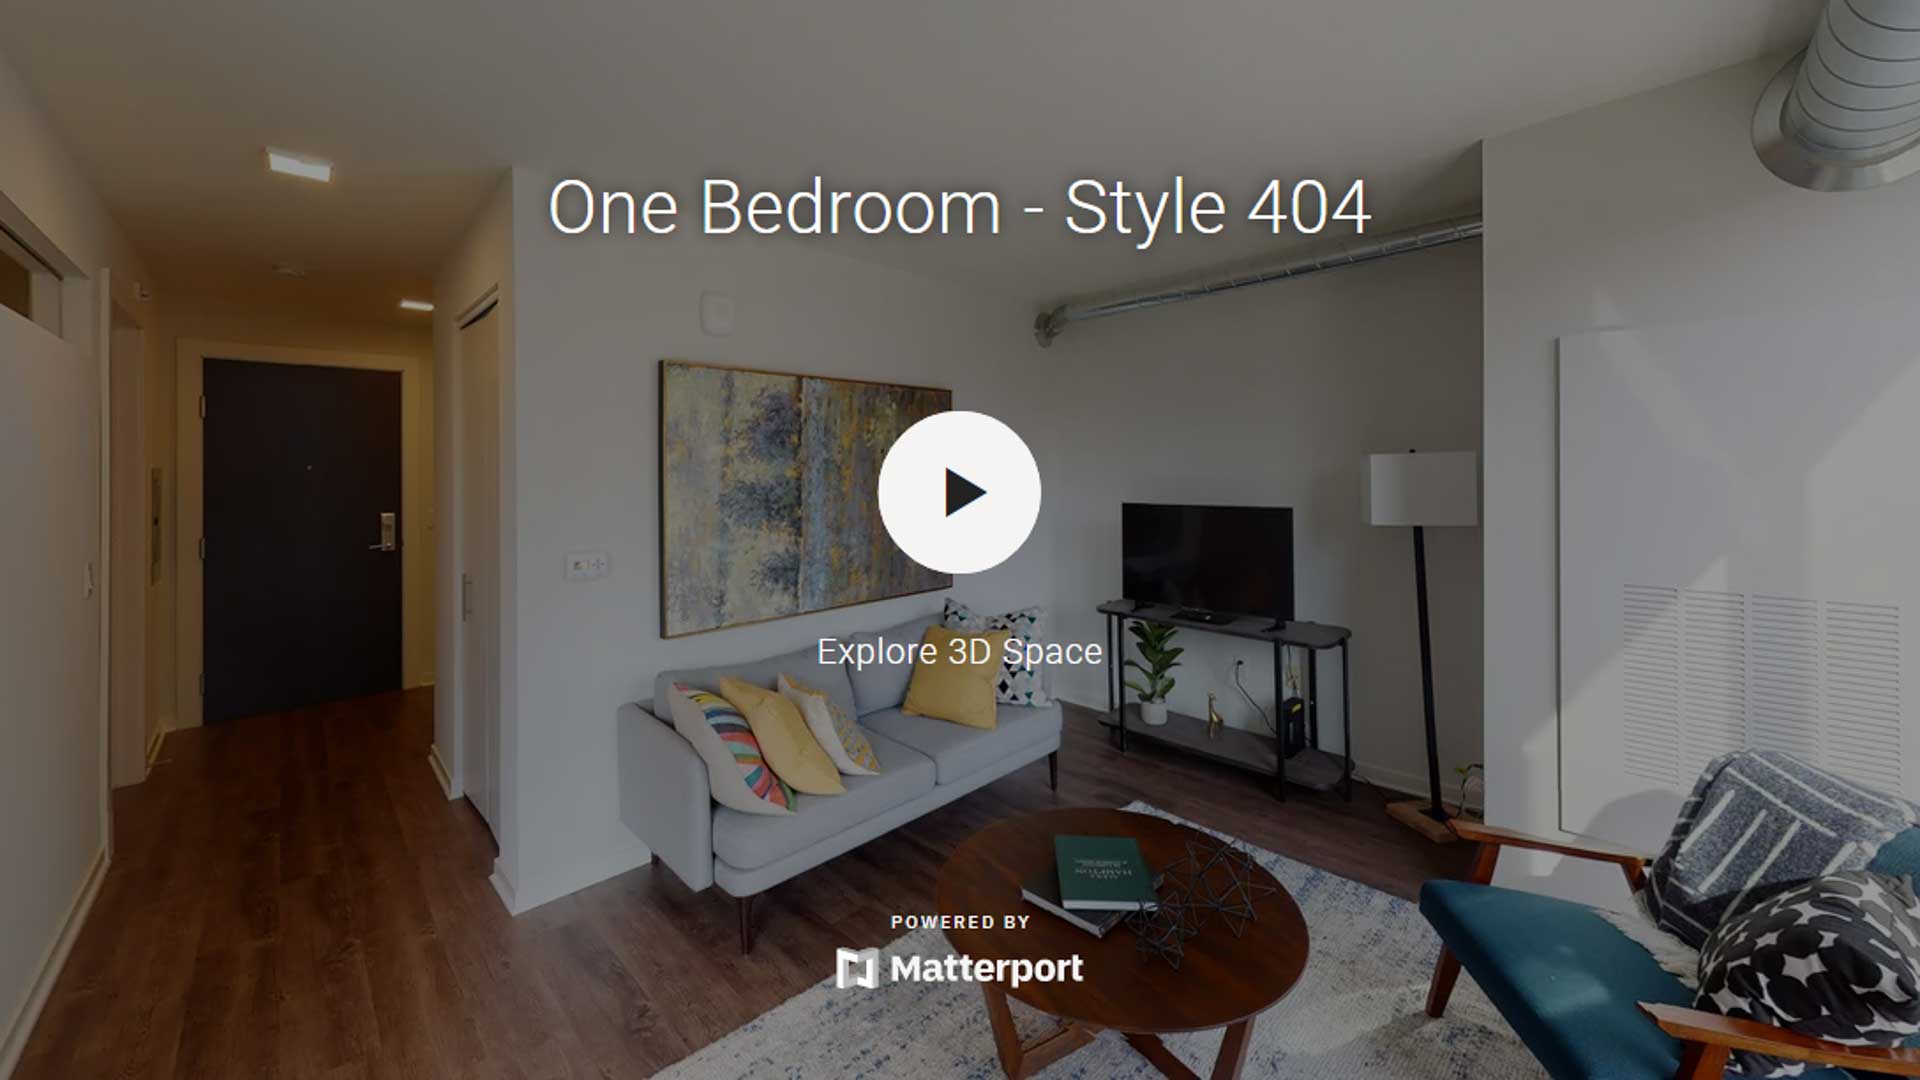 One Bedroom - Style 404